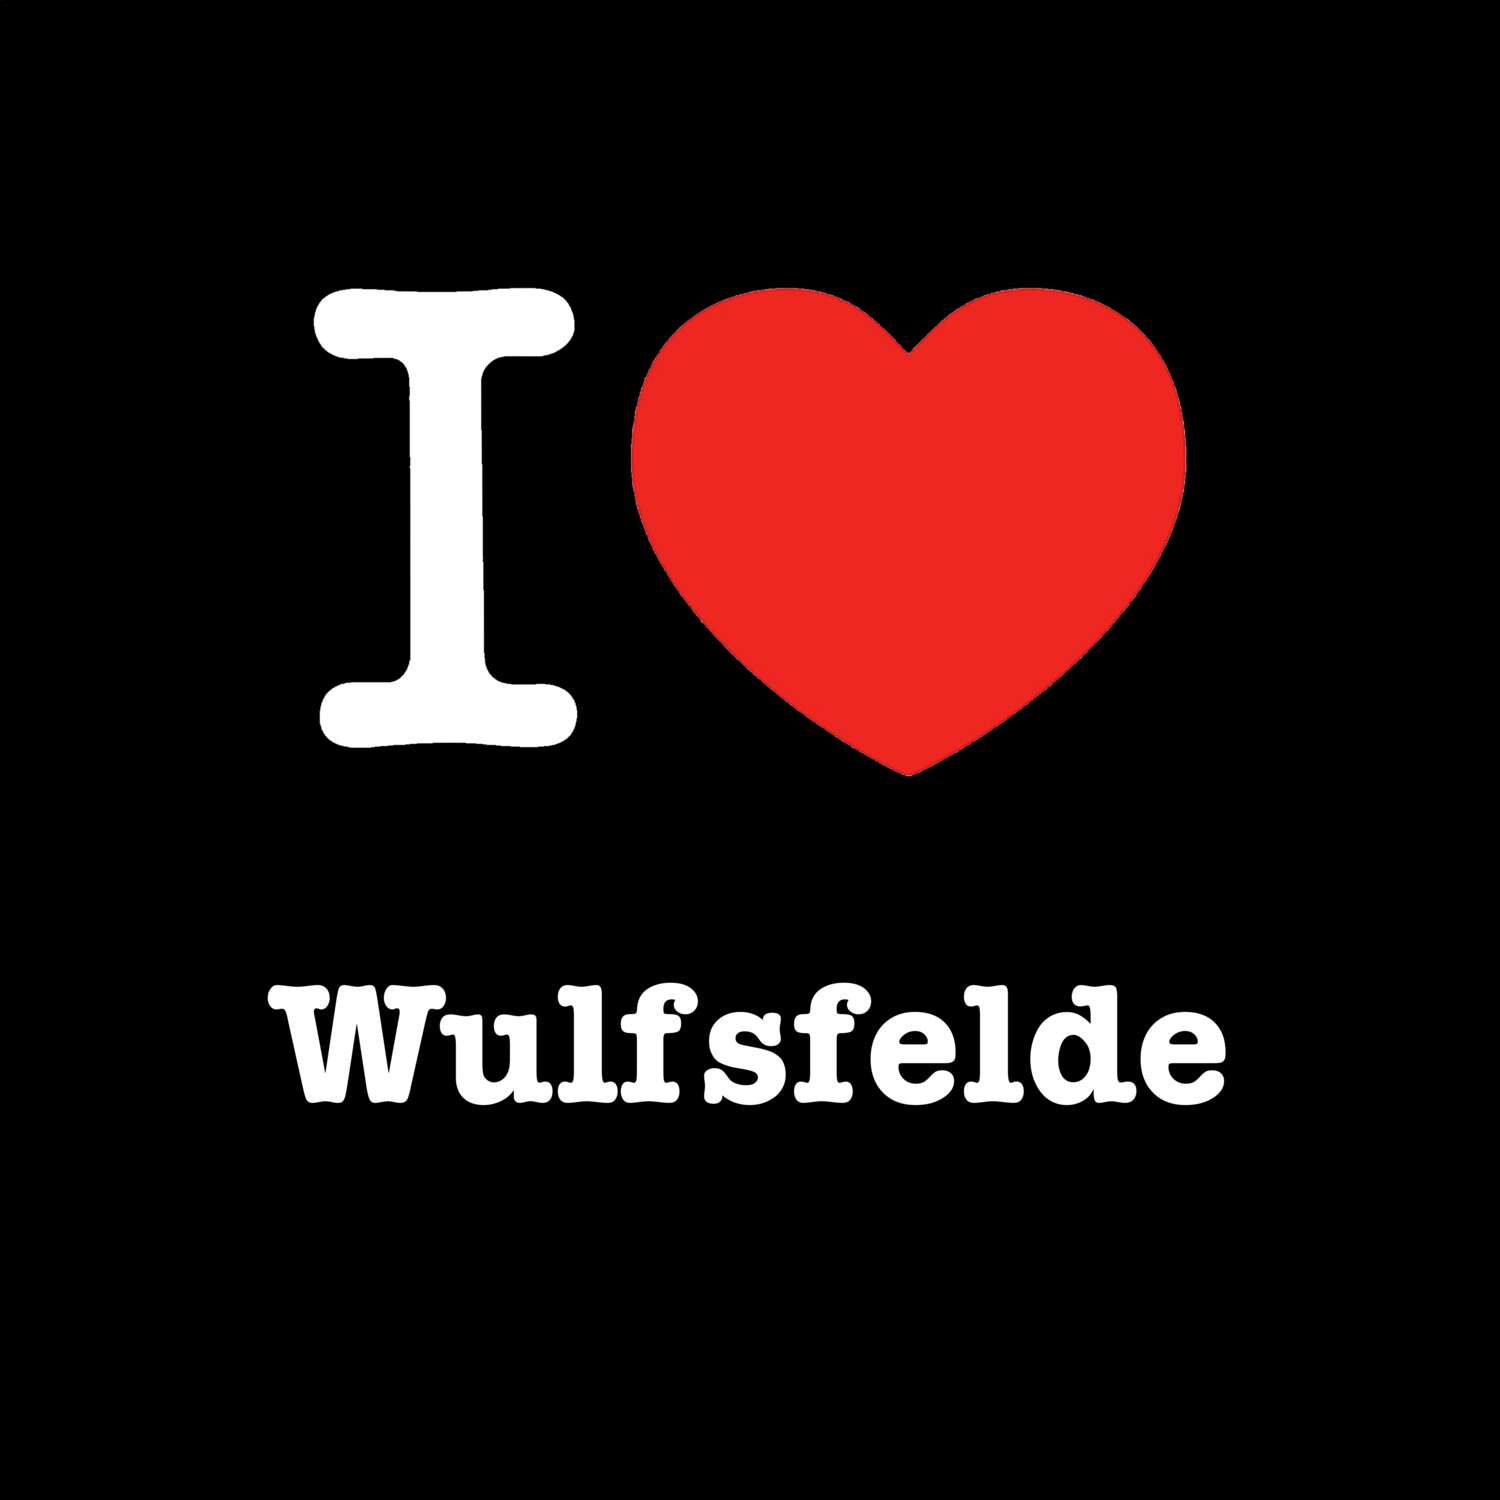 Wulfsfelde T-Shirt »I love«